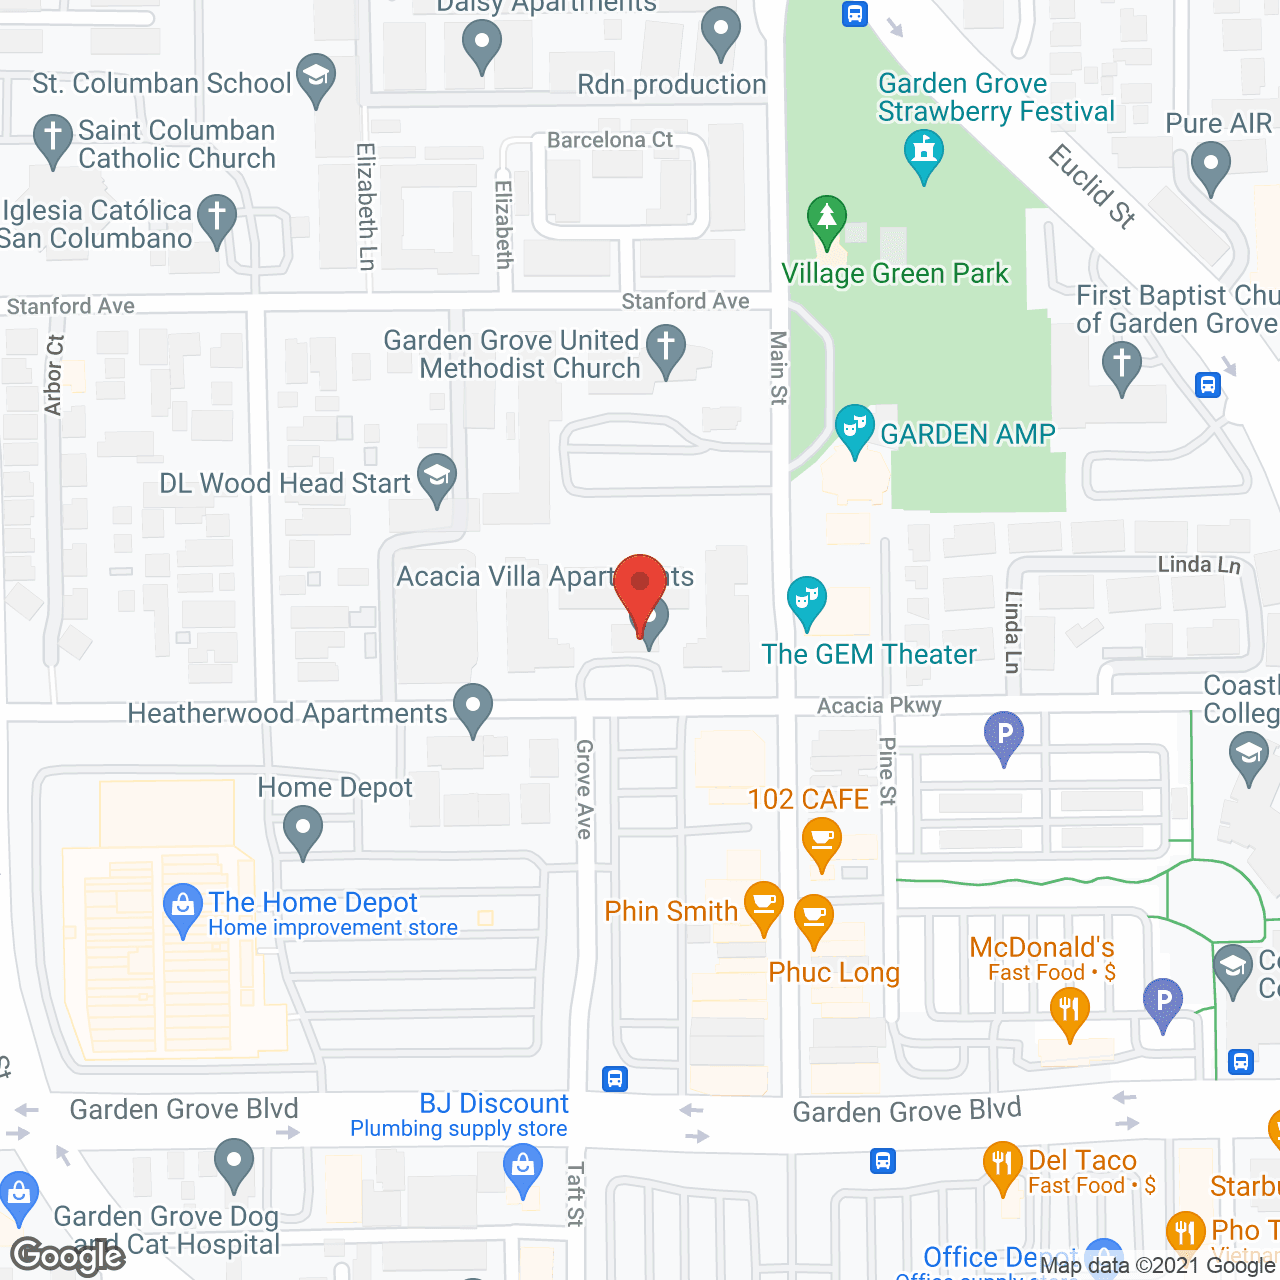 Acacia Villa Apartments in google map